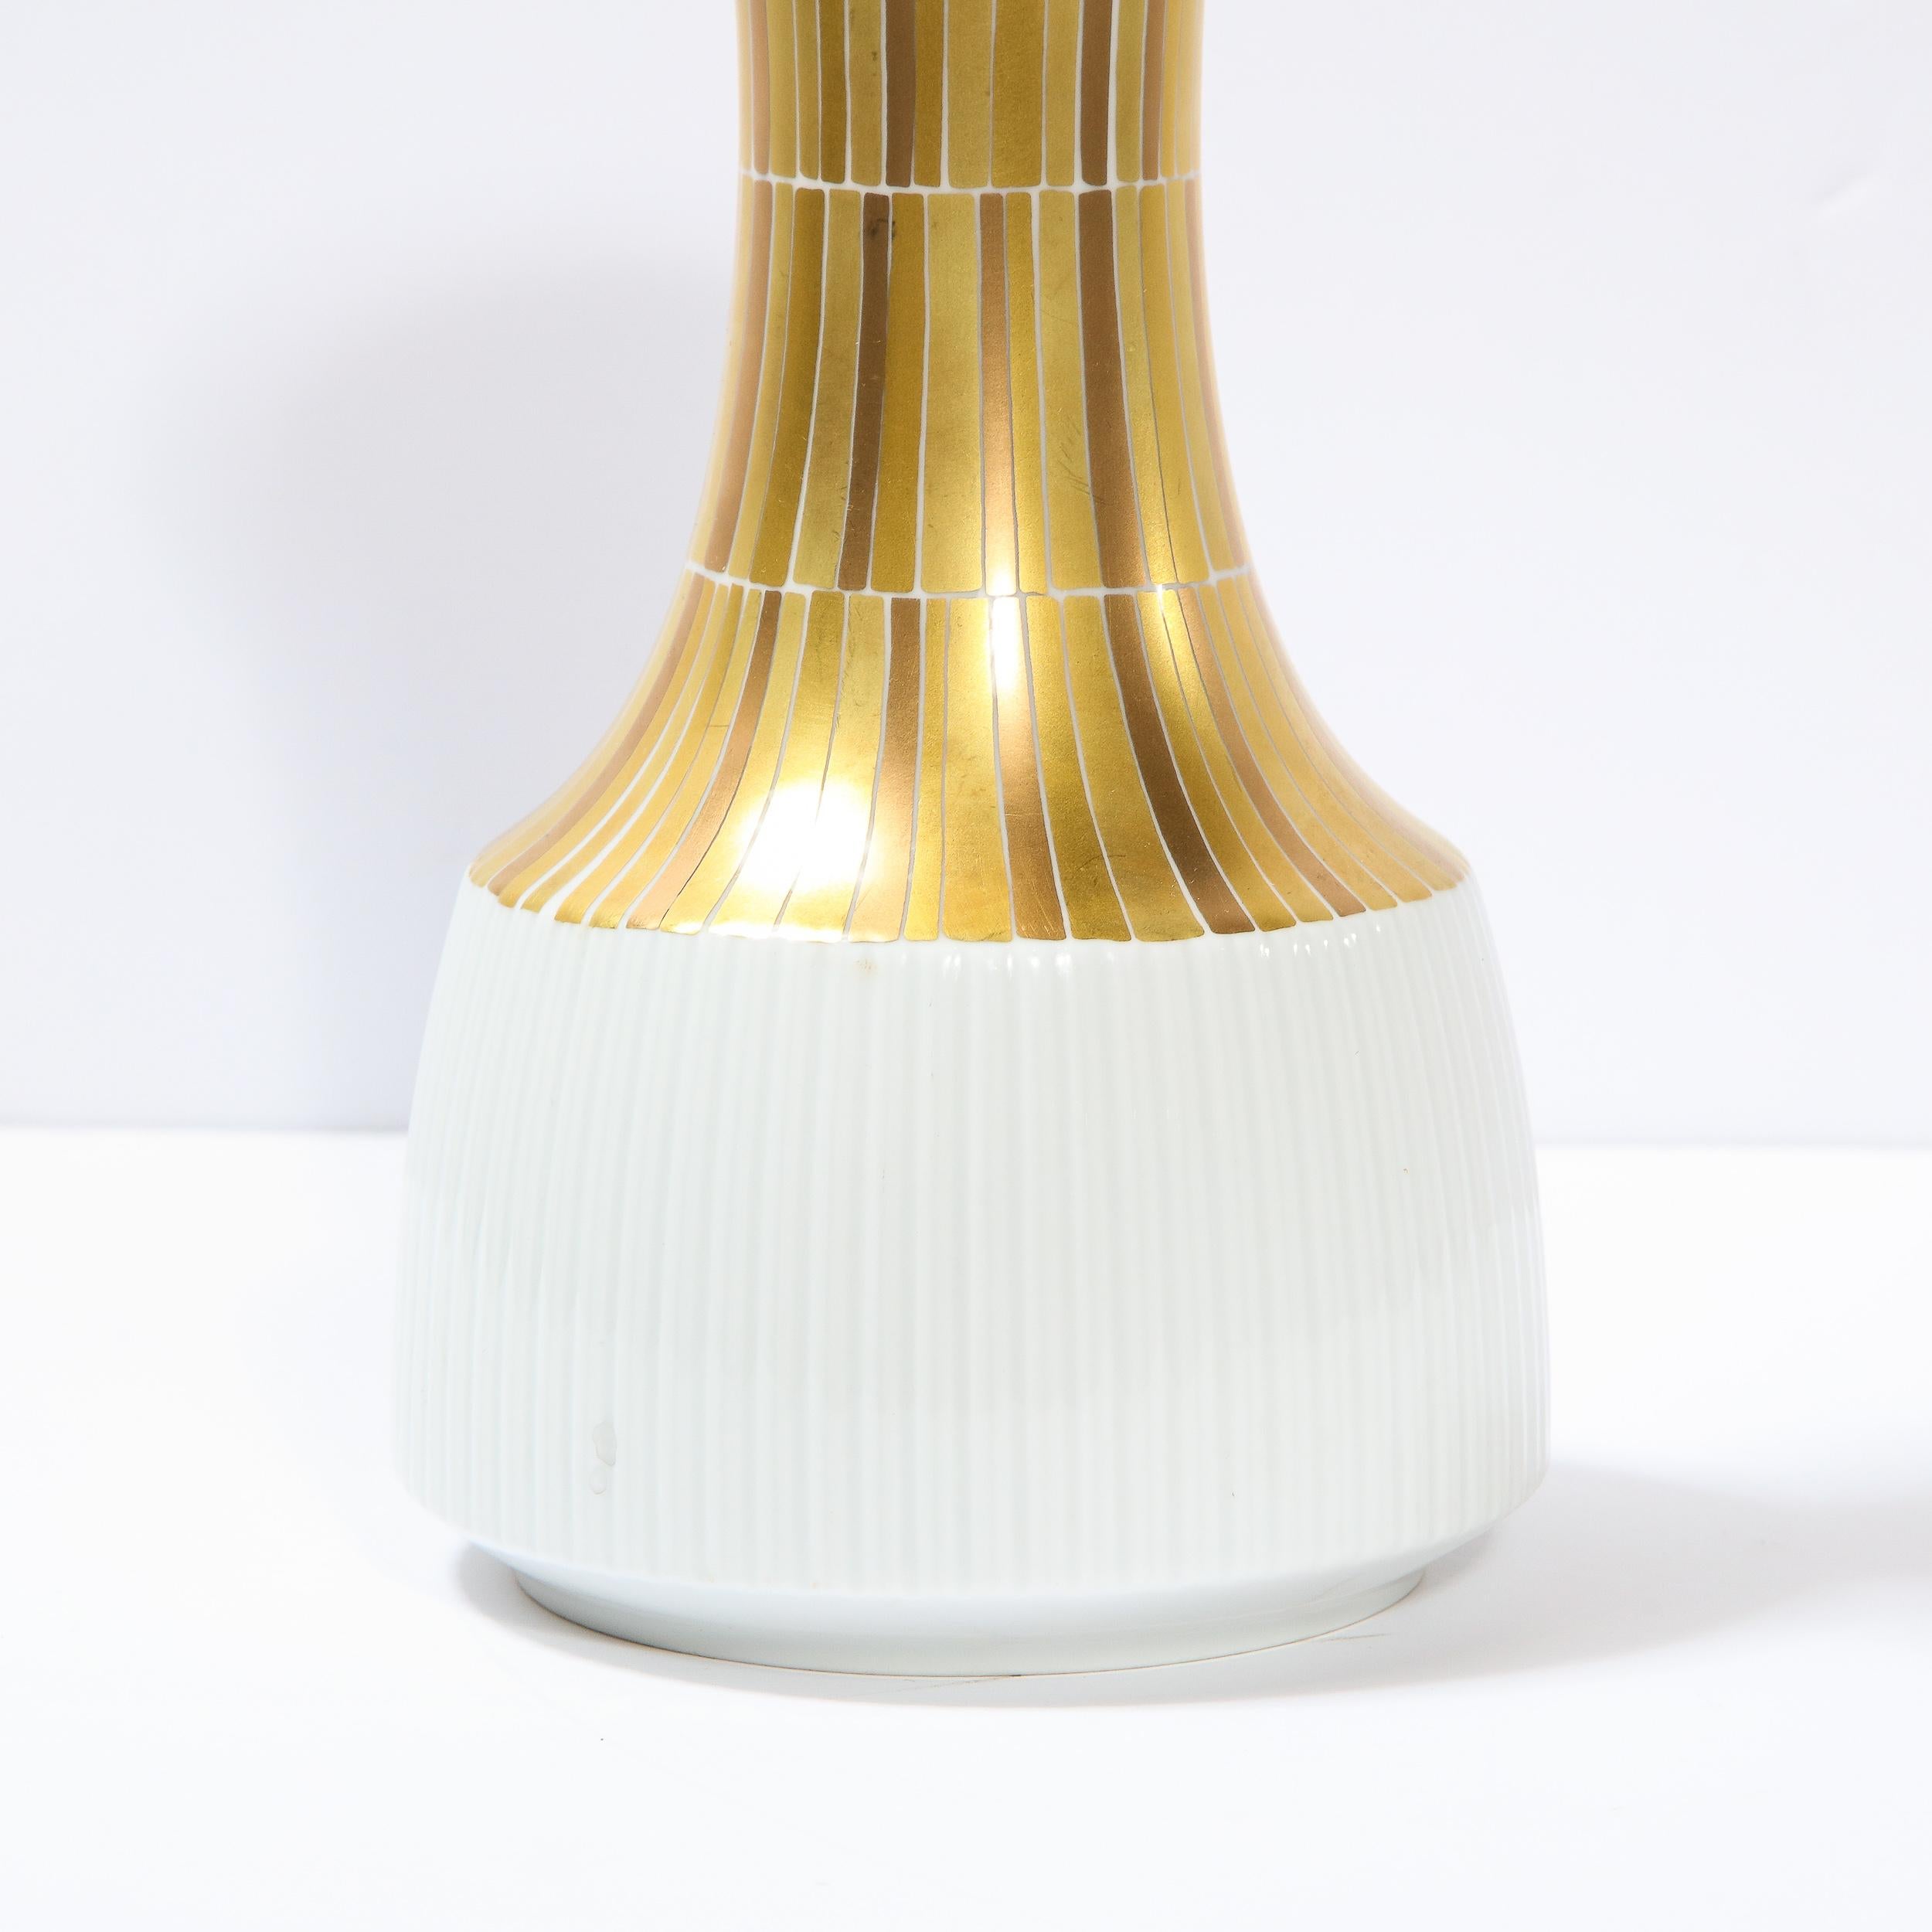 German Signed Modernist Hourglass Form Porcelain Vase by Tapio Wirkkala for Rosenthal